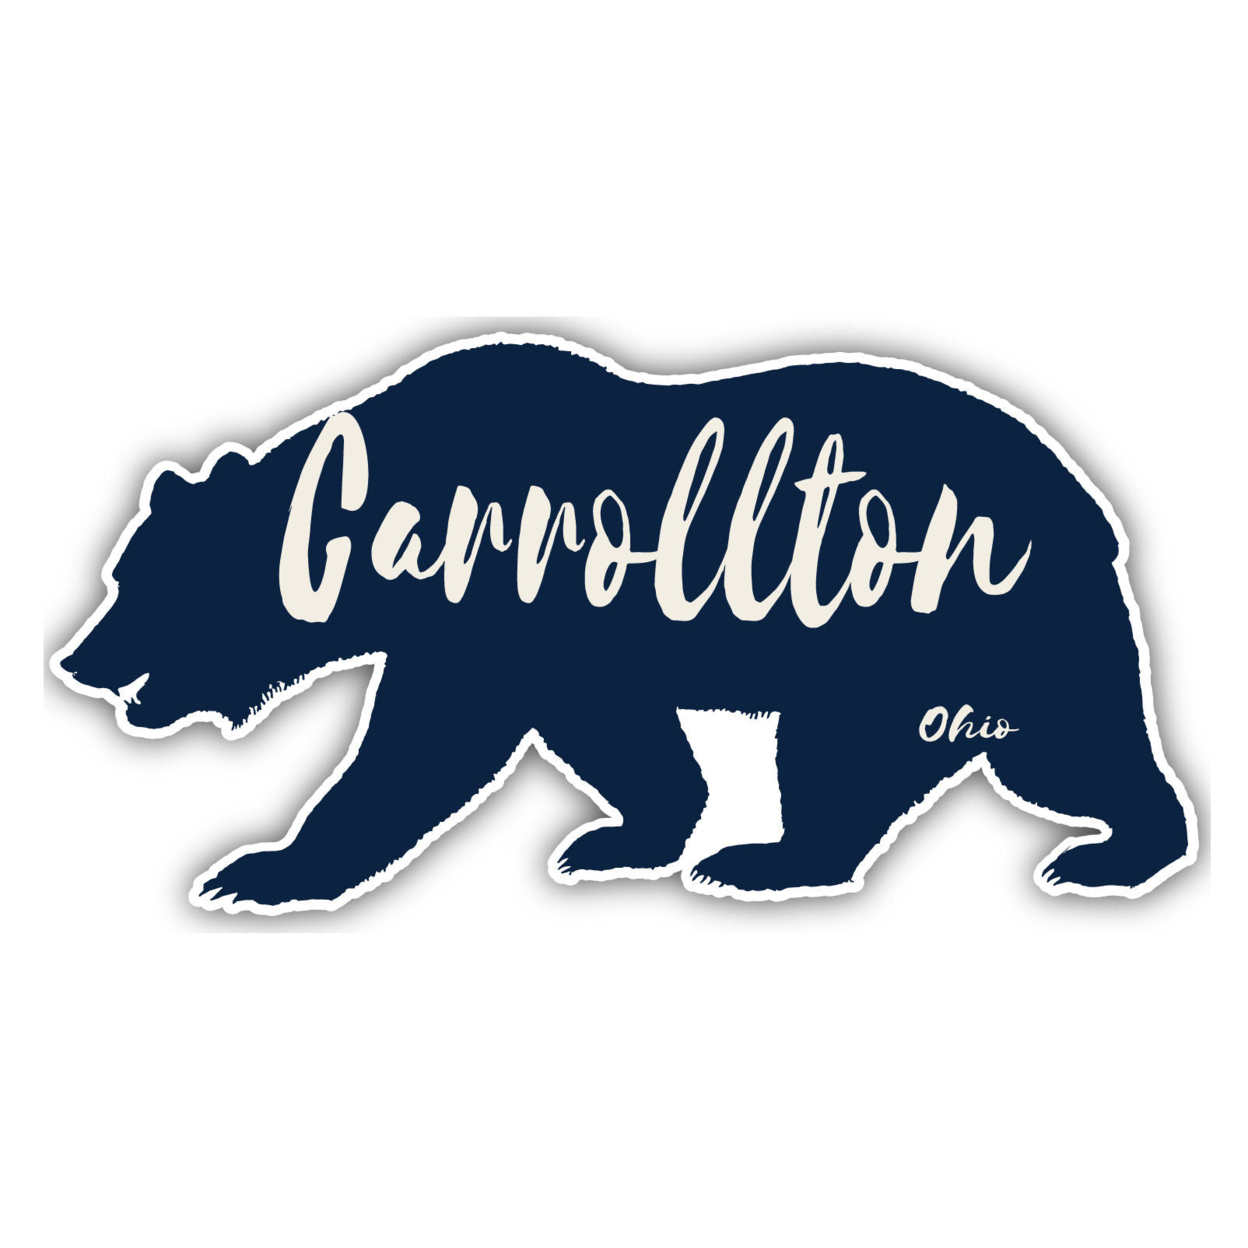 Carrollton Ohio Souvenir Decorative Stickers (Choose Theme And Size) - 4-Pack, 6-Inch, Bear